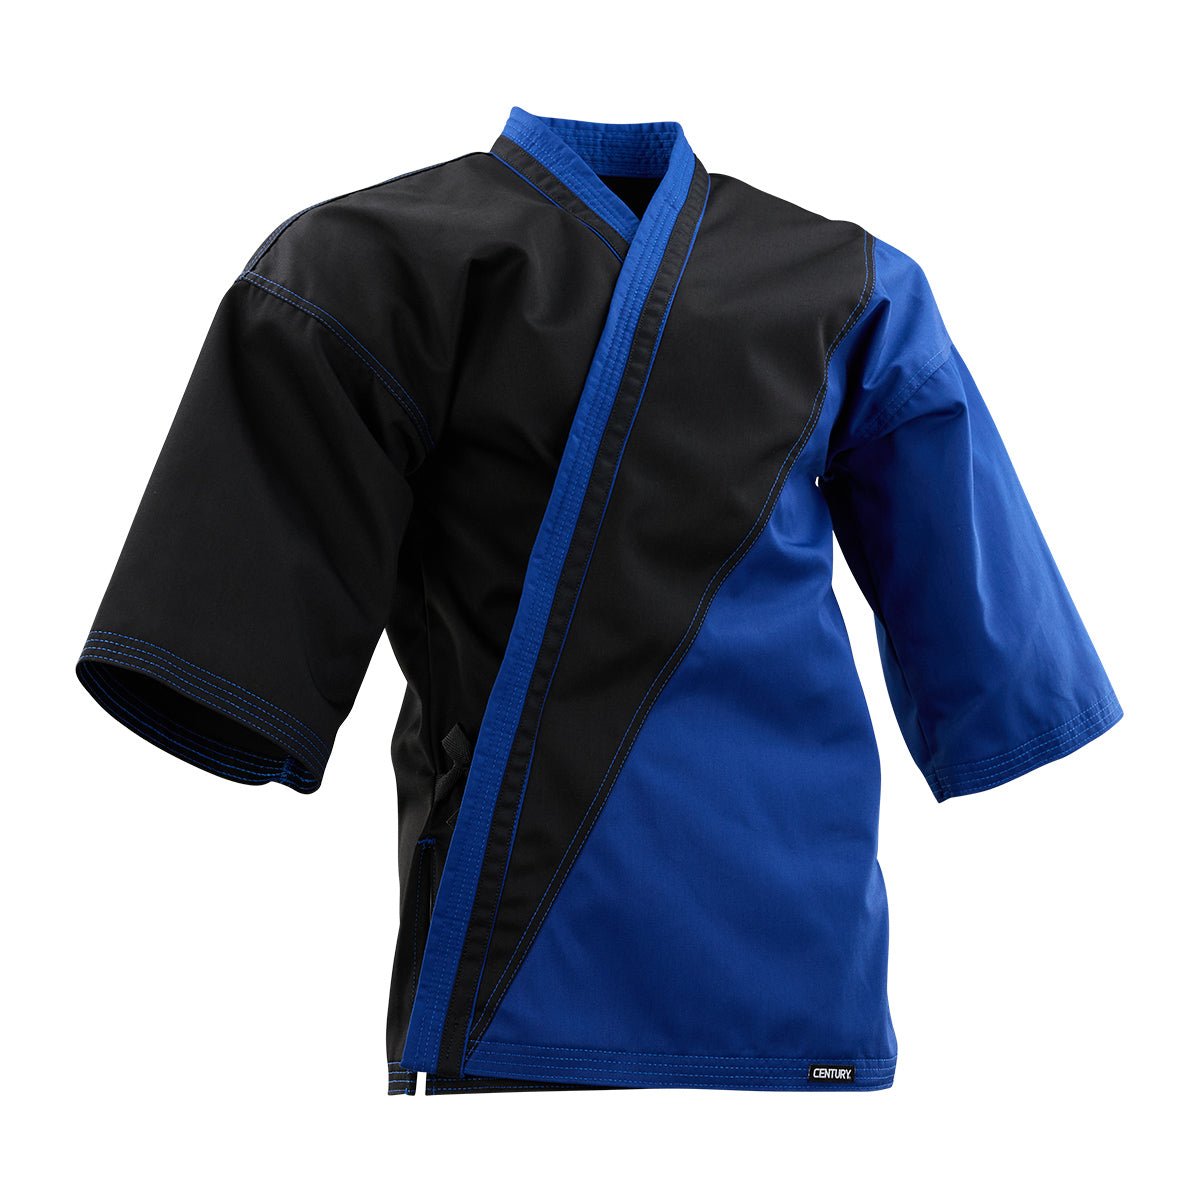 Splice Program Uniform Jacket Black/Blue